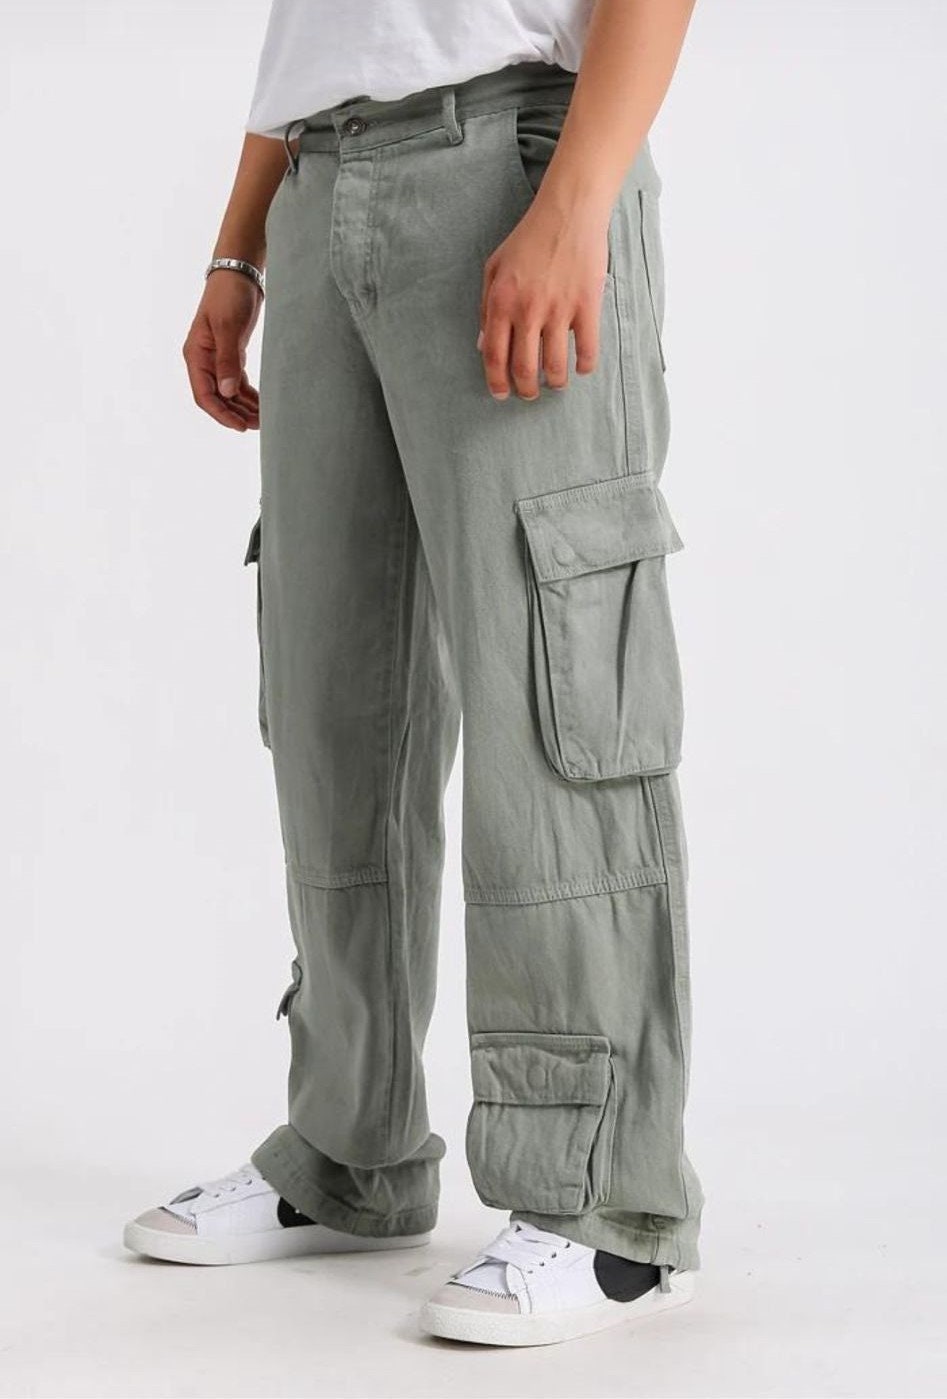 authorized discount sale Pocket Fundayz Cargo Baggy Khaki Pant Baggy Pants  with Cargo Pockets 